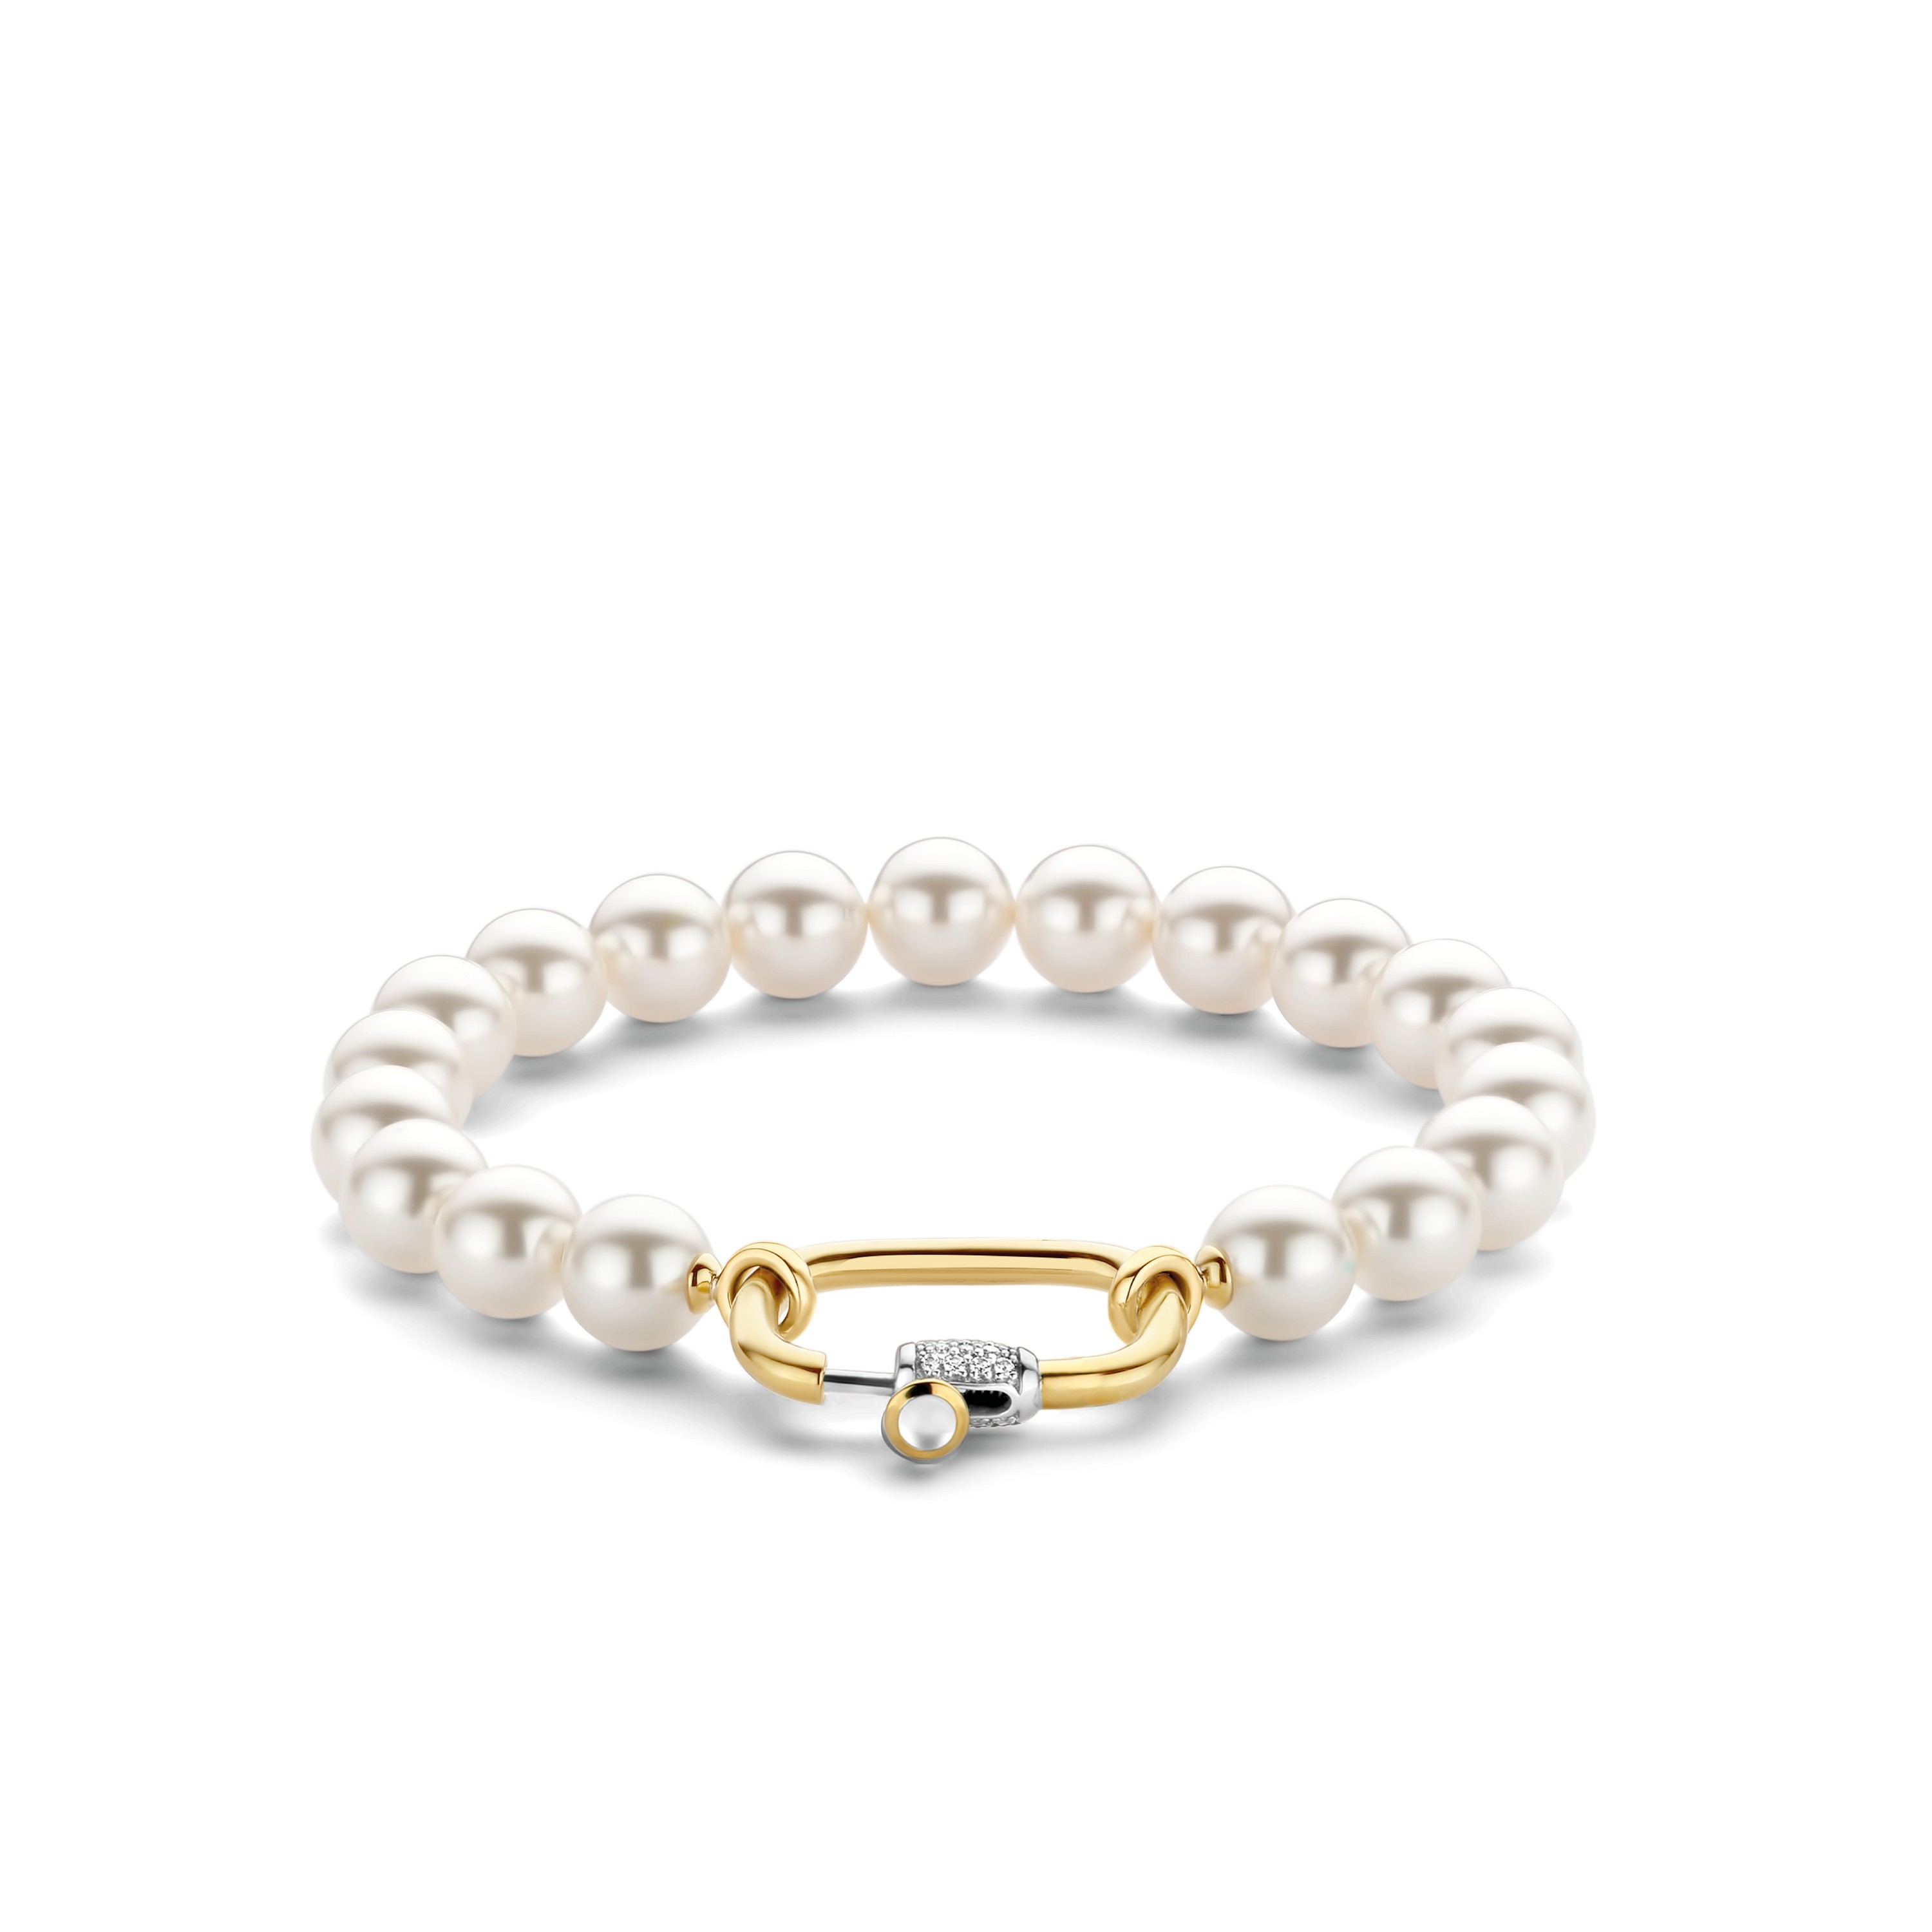 TI SENTO - Milano Bracelet 2961PW Gala Jewelers Inc. White Oak, PA